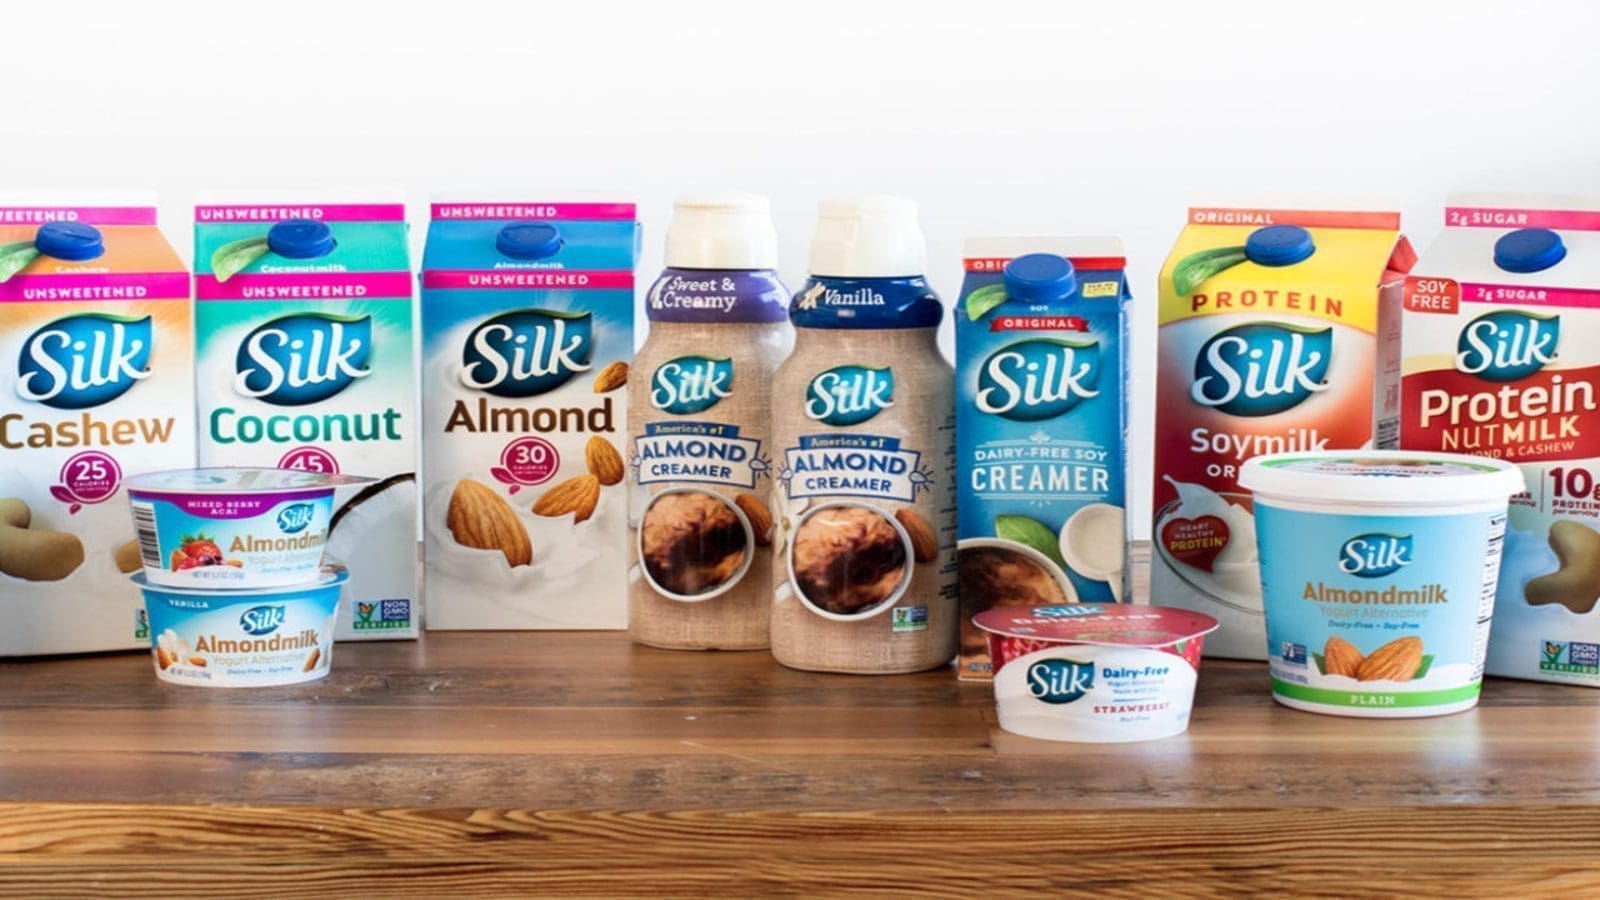 Danone completes sales of Vega brand, to launch new milk alternative platform this year